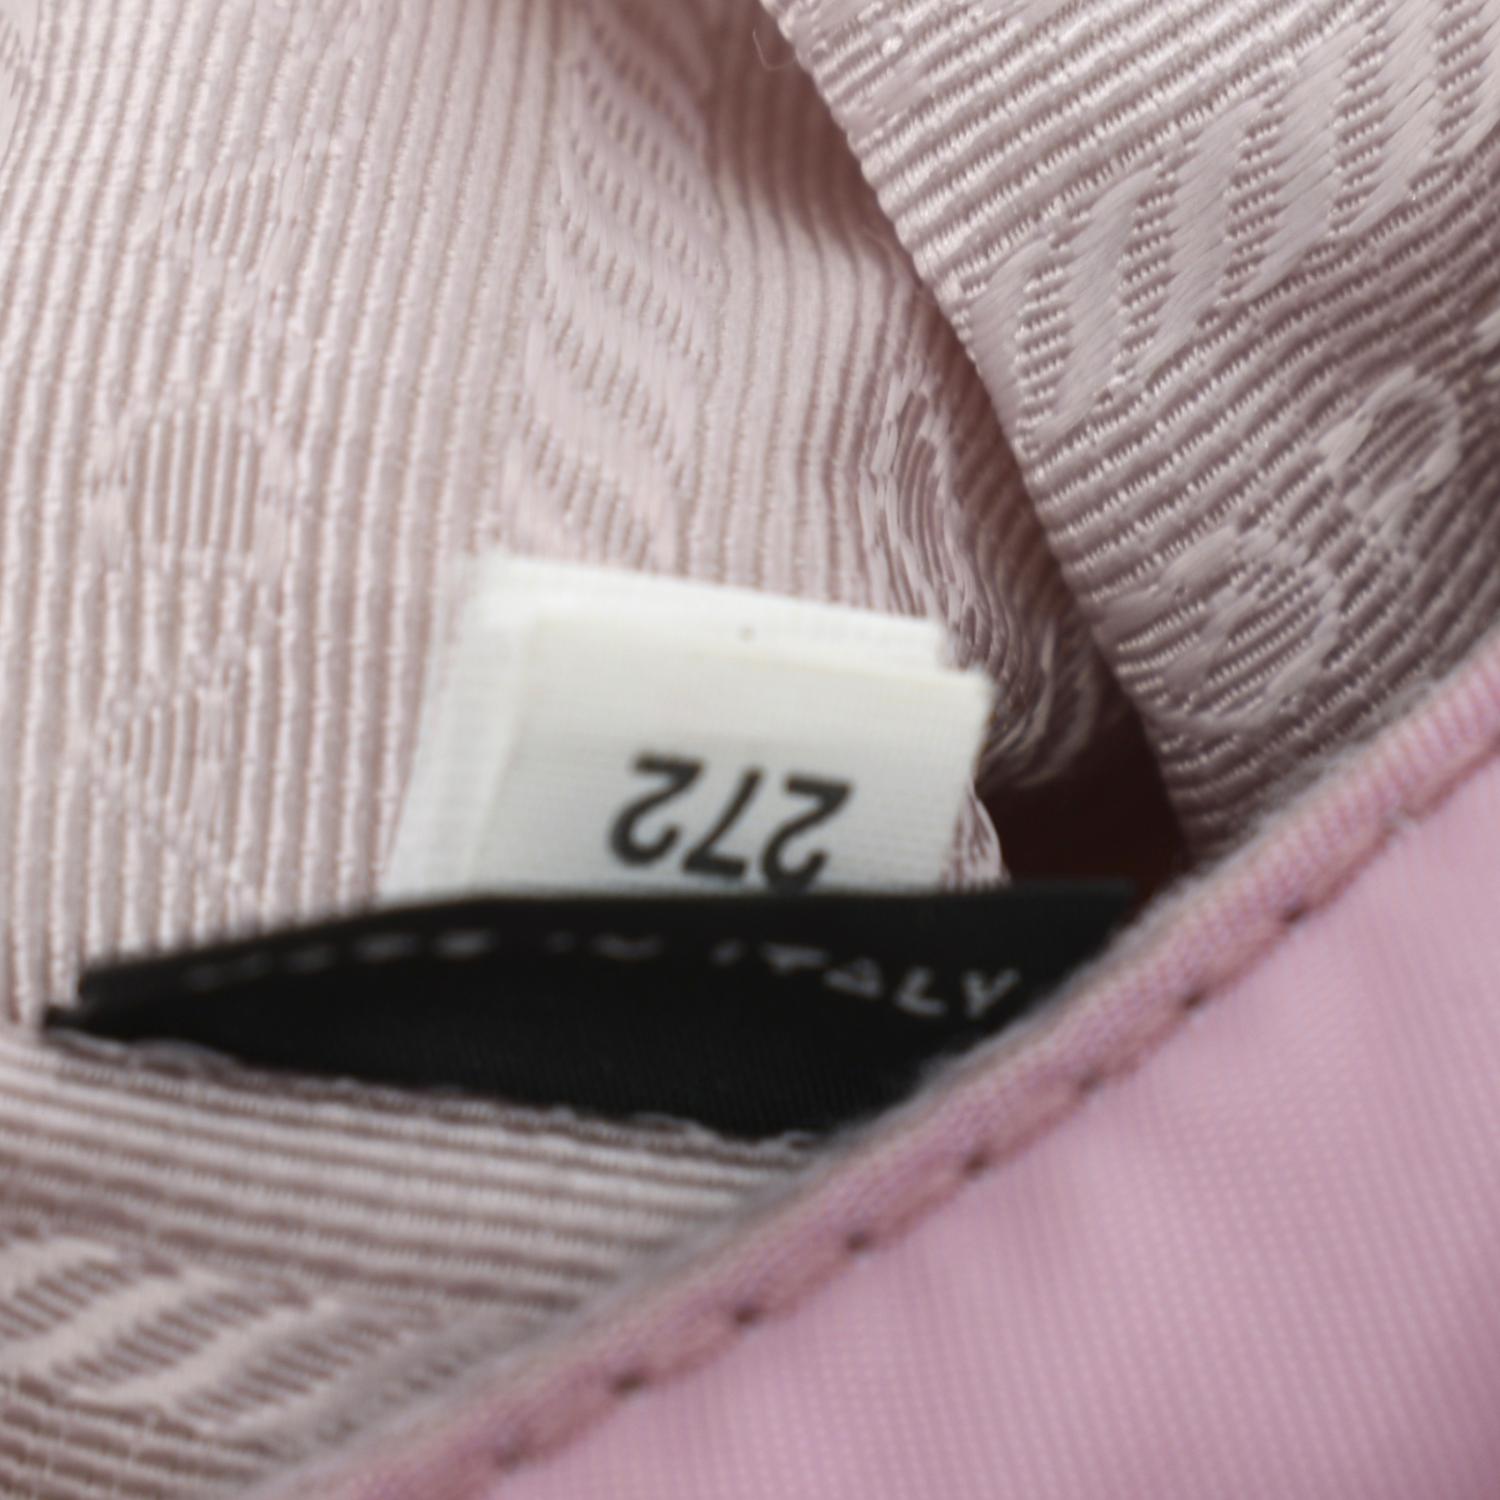 Re-edition 2005 zip glitter handbag Prada Pink in Glitter - 30037151